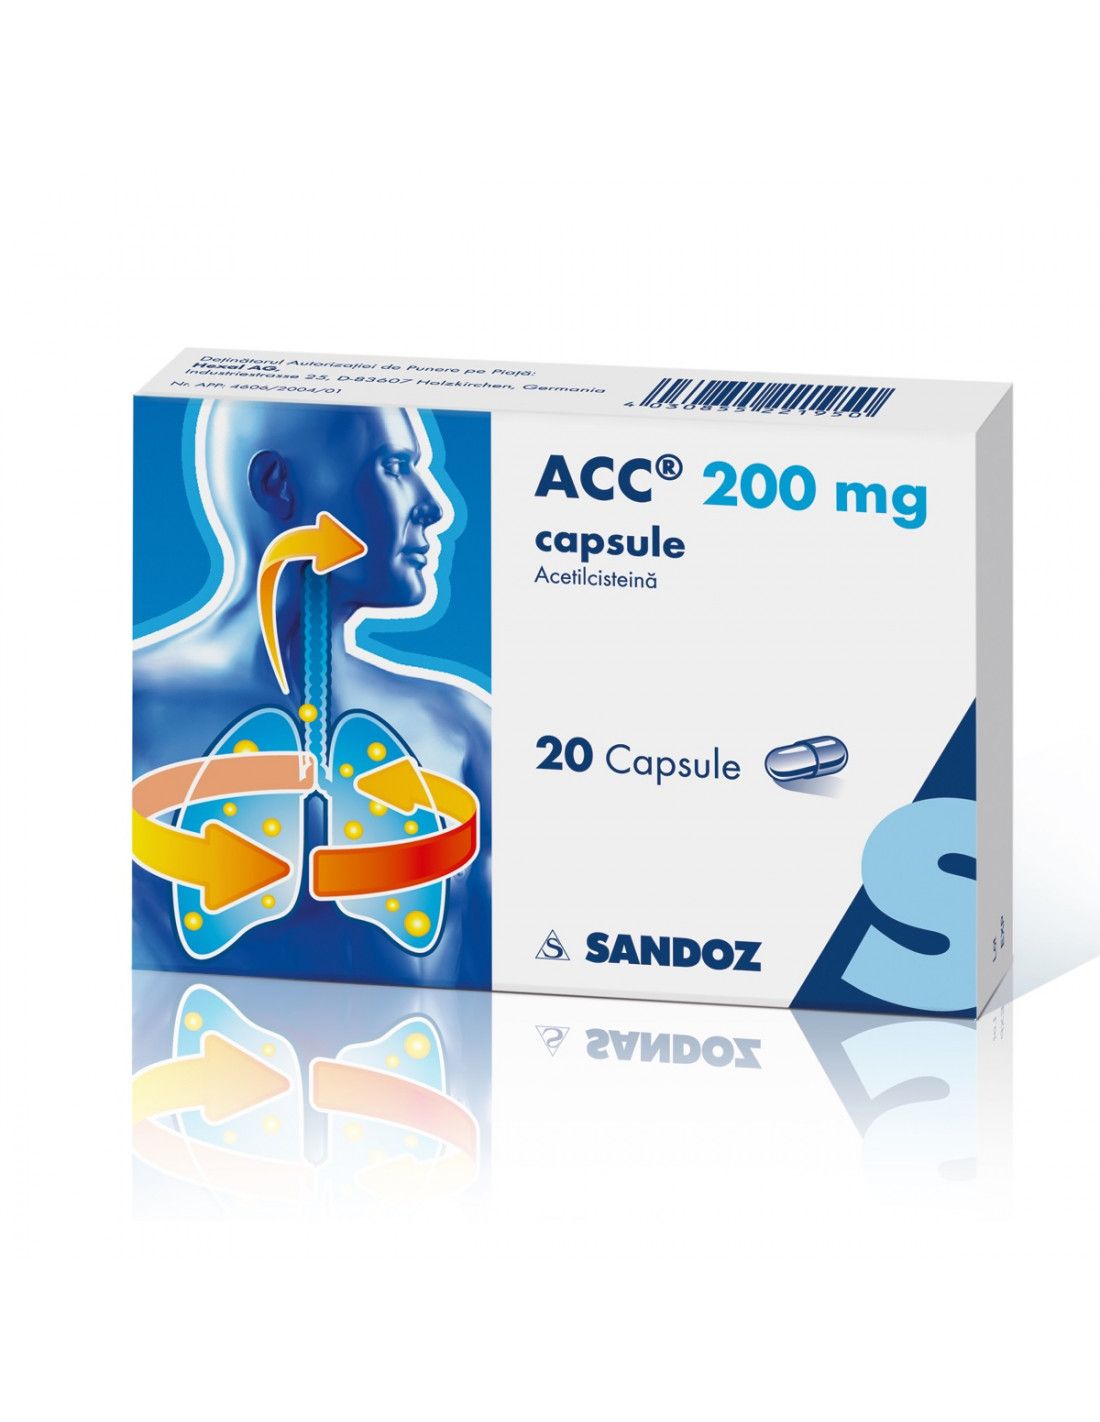 ACC 200 mg 20 capsule